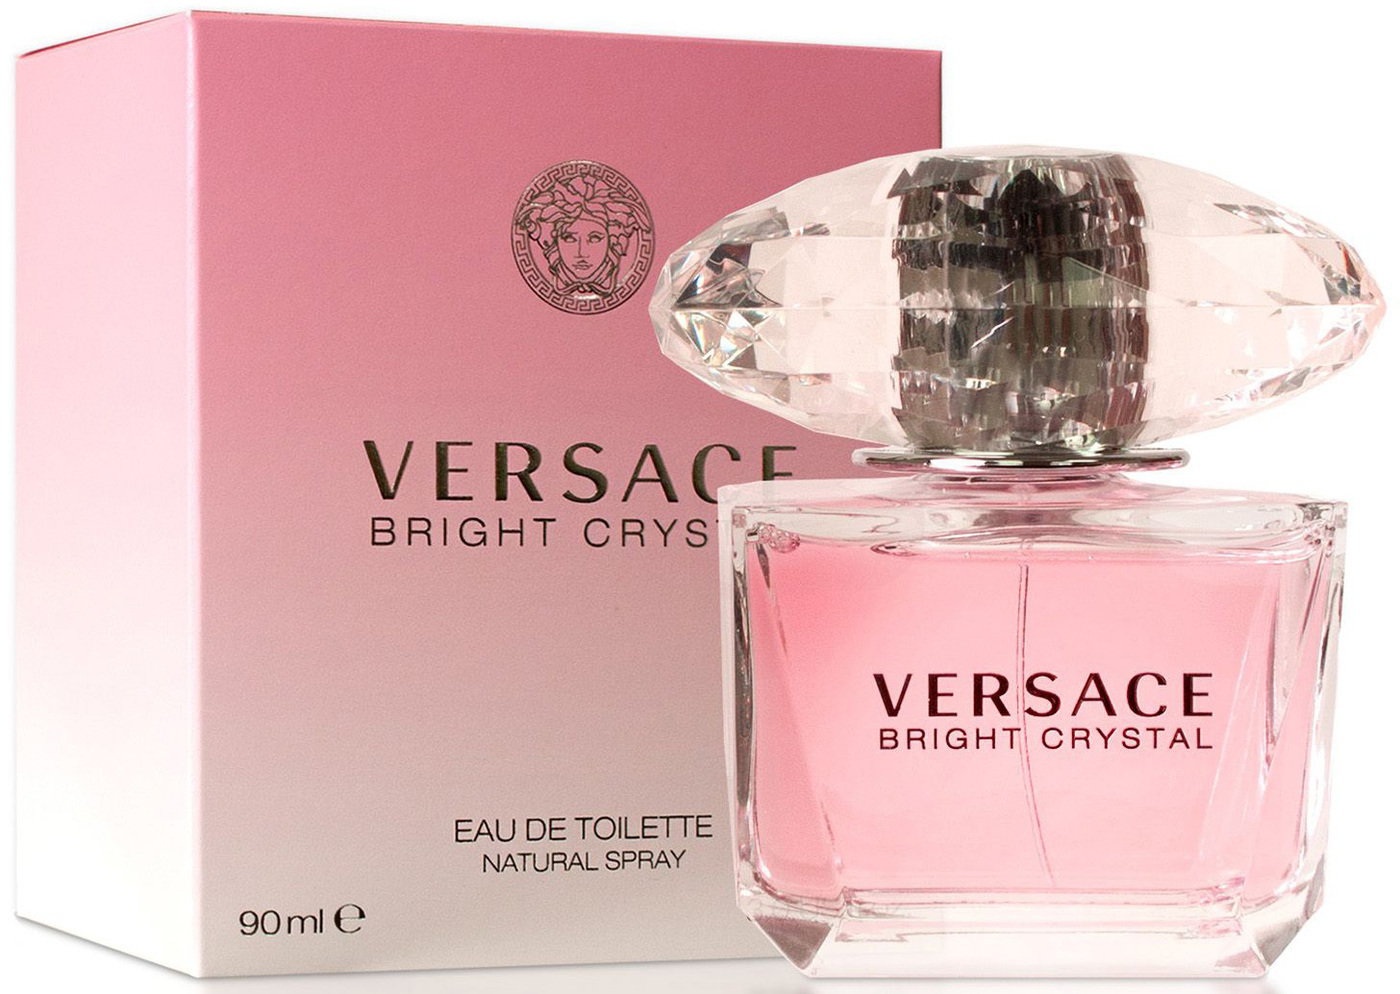 Versace crystal женские. Версаче Брайт Кристалл 90 мл. Туалетная вода Bright Crystal Versace 90ml. Versace - Bright Crystal Eau de Toilette 90 мл. Versace Bright Crystal Версаче Брайт духи 90мл.